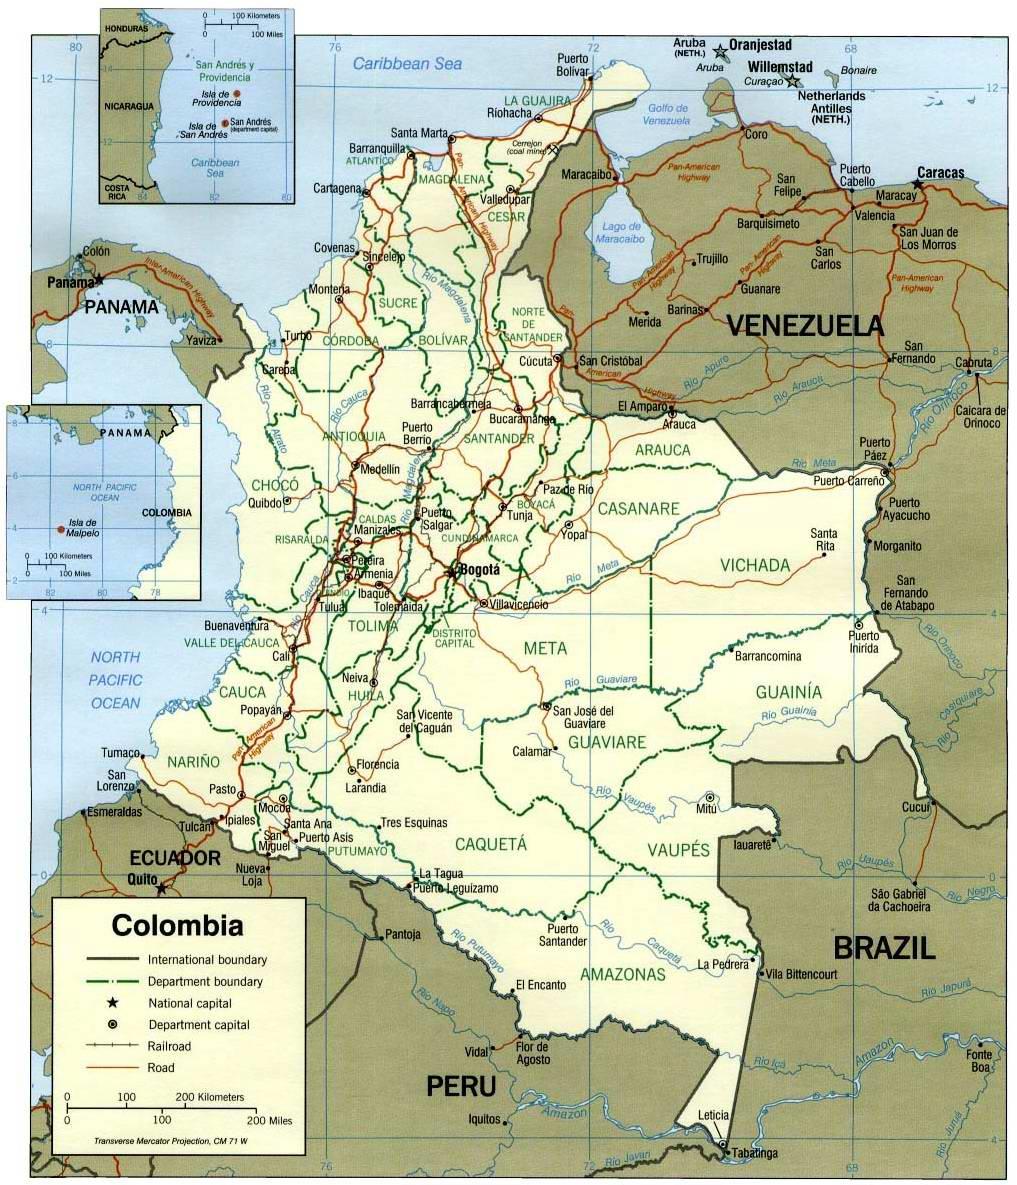 ICG Latin America Report N 6, 13 November 2003 19 APPENDIX A MAP OF